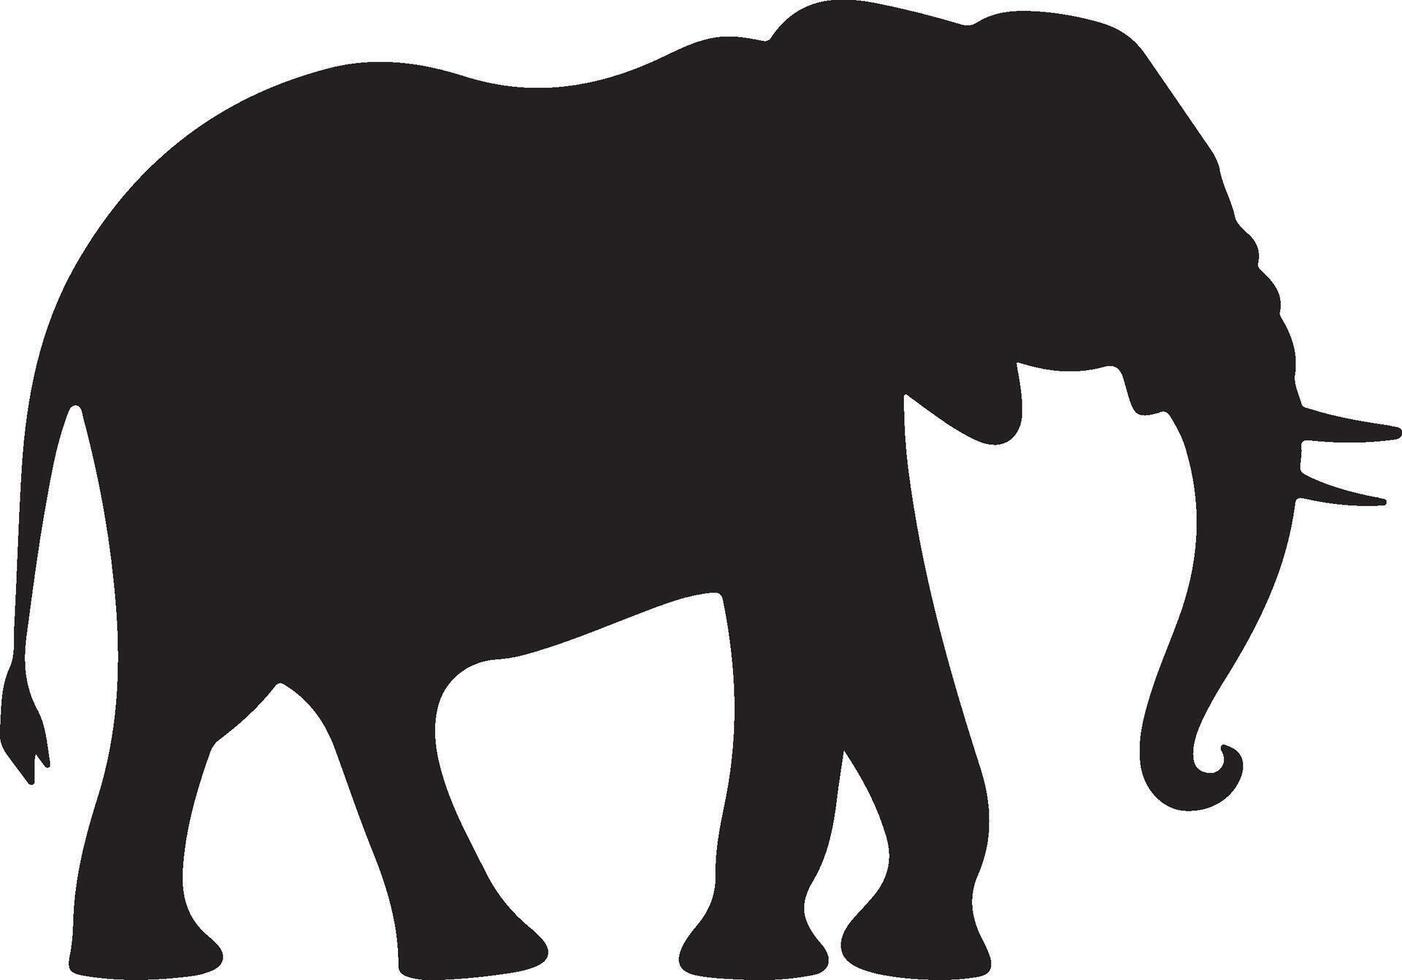 Elephant Silhouette Vector Illustration White Background